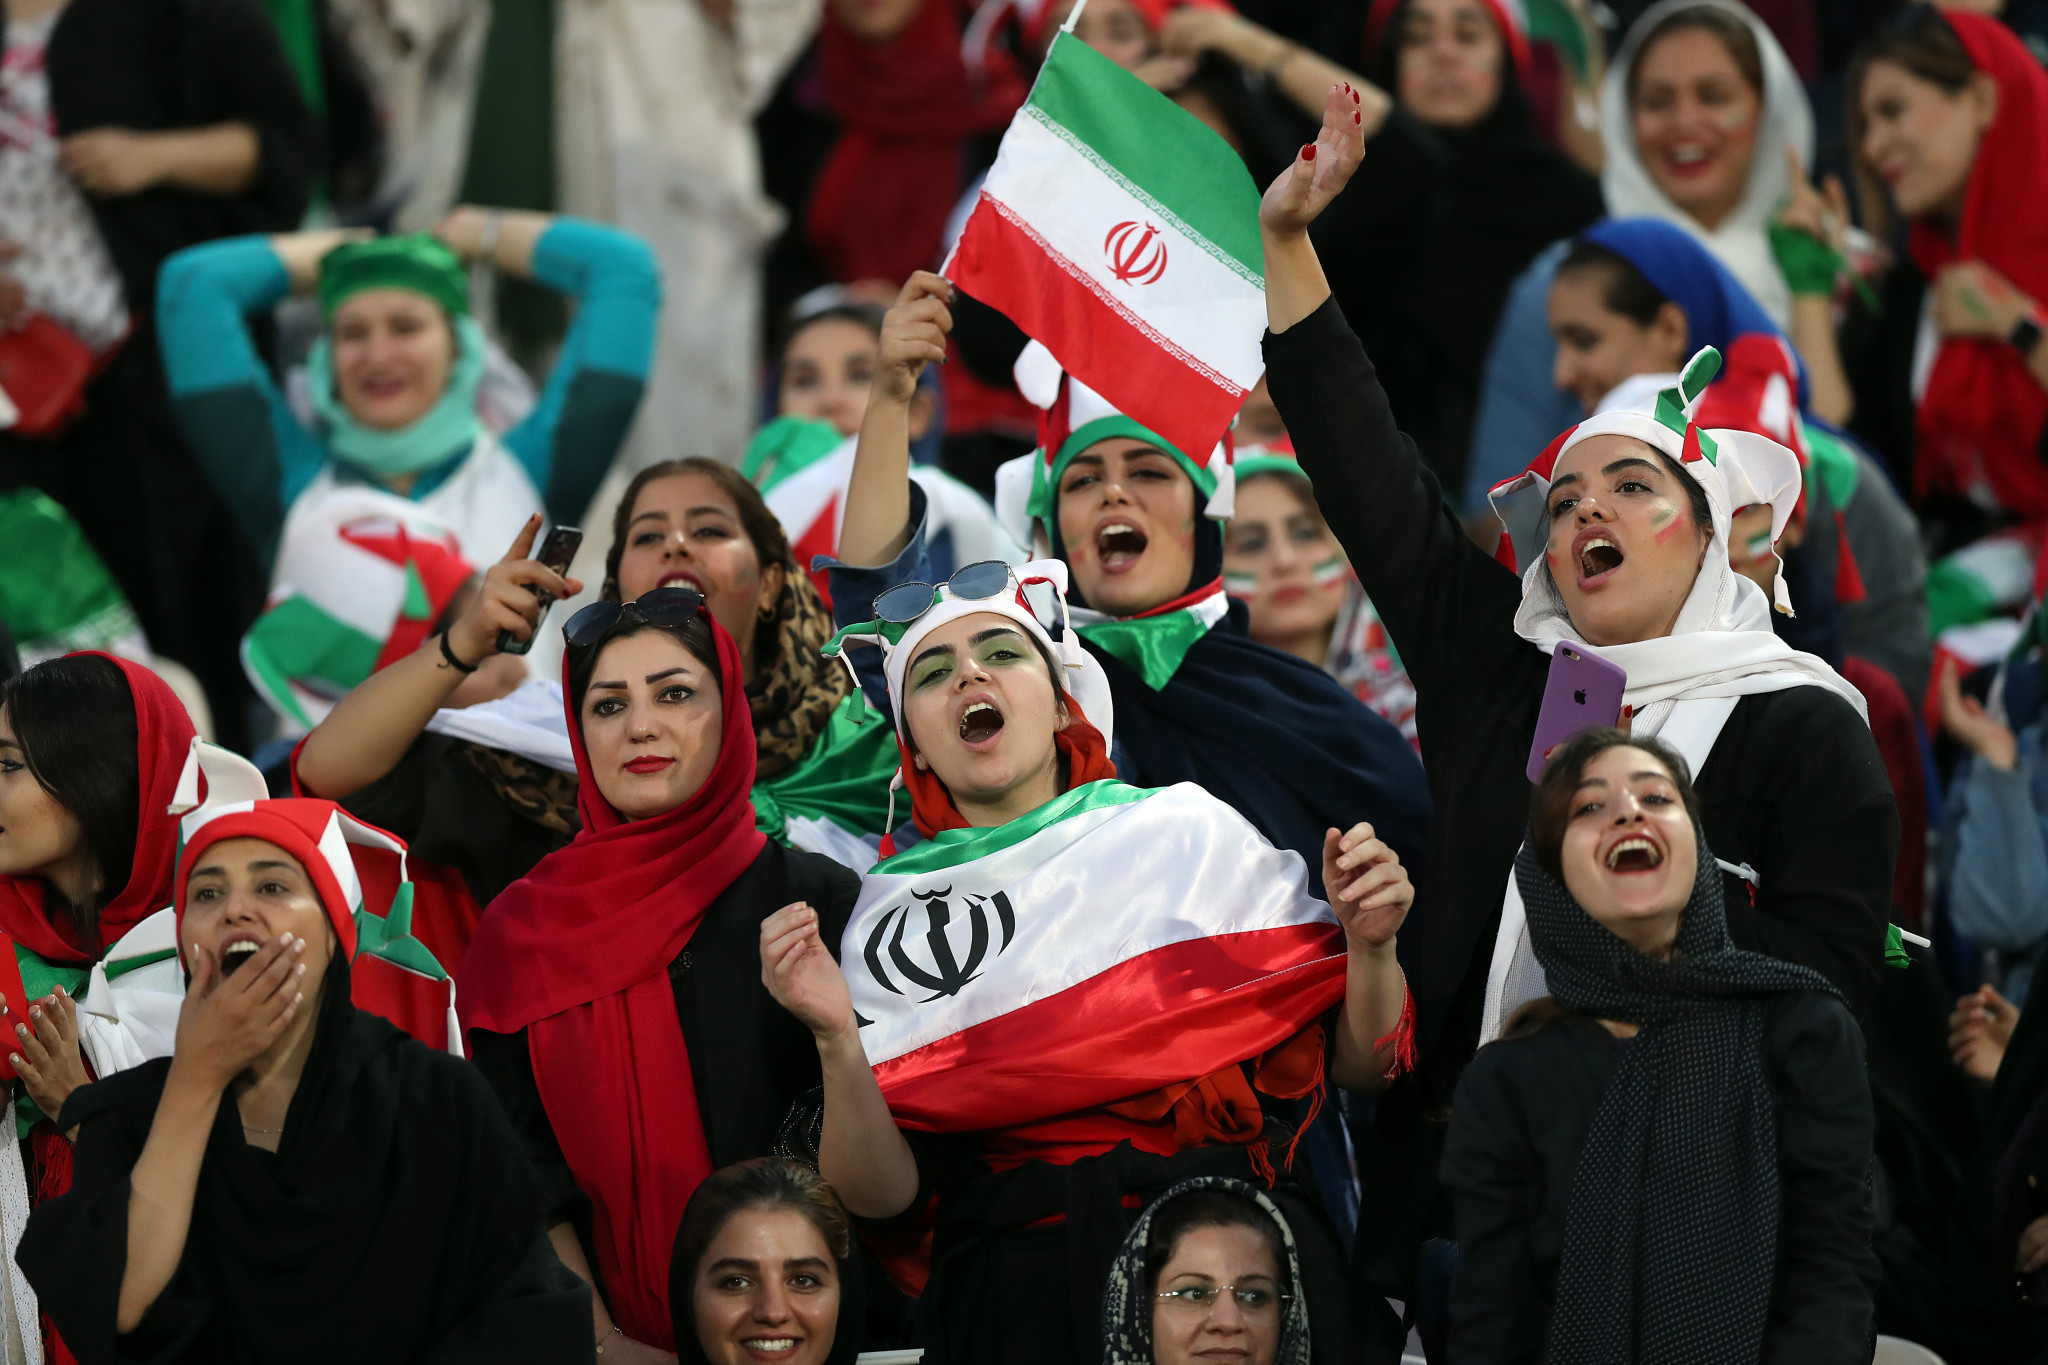 Open Stadiums activists urge FIFA to expel Iran from World Cup amid Mahsa Amini protests